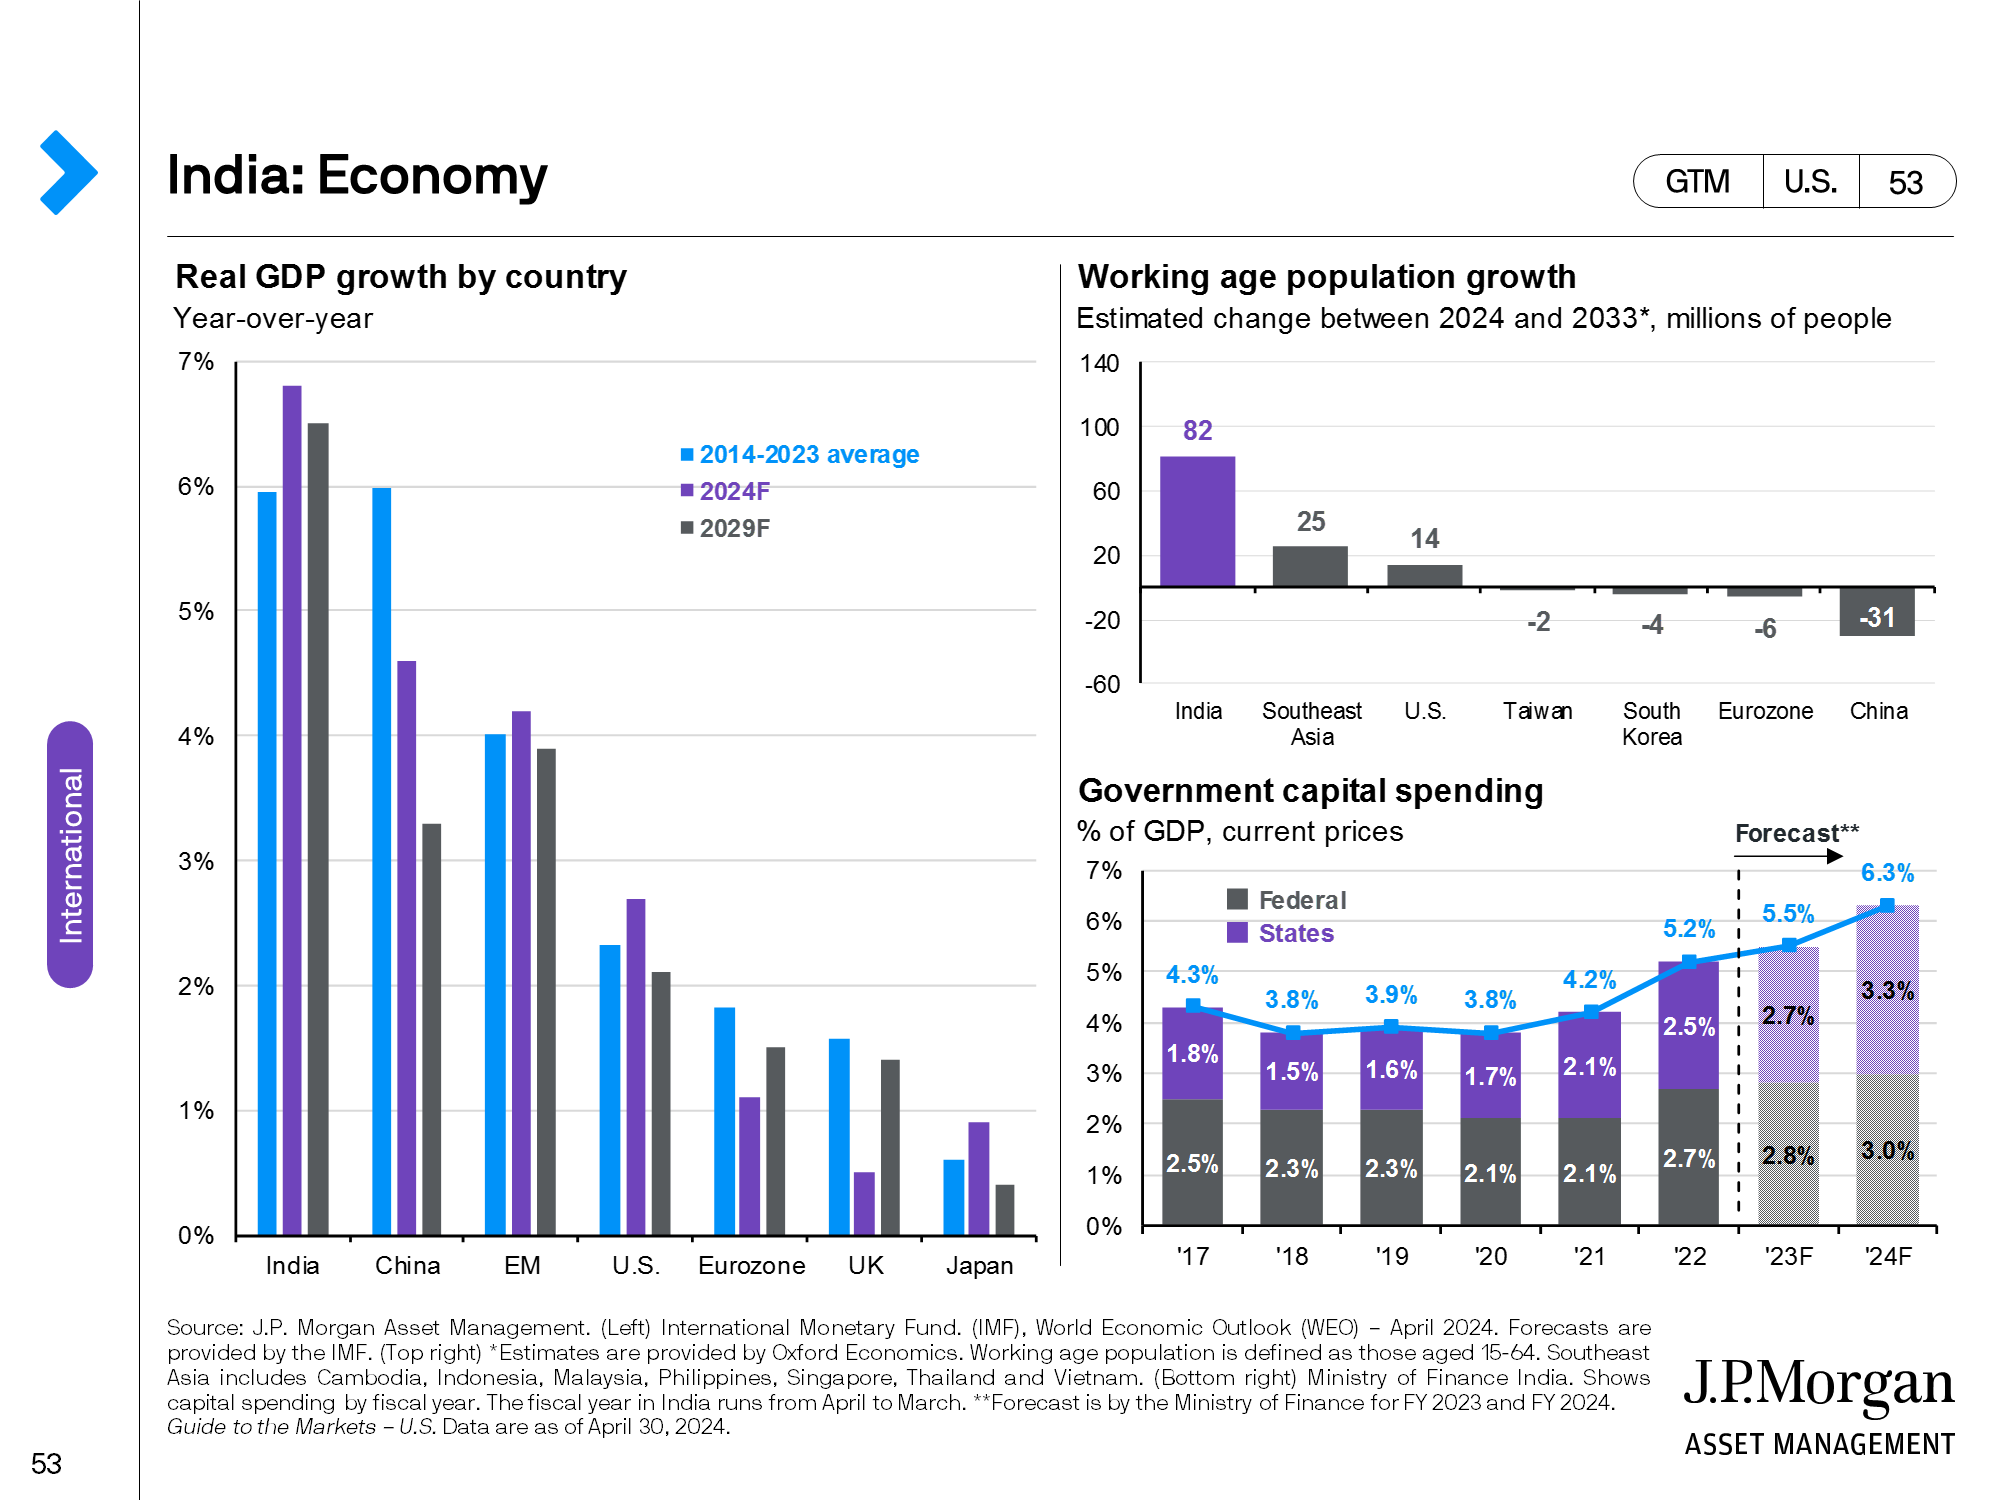 China: Economic growth